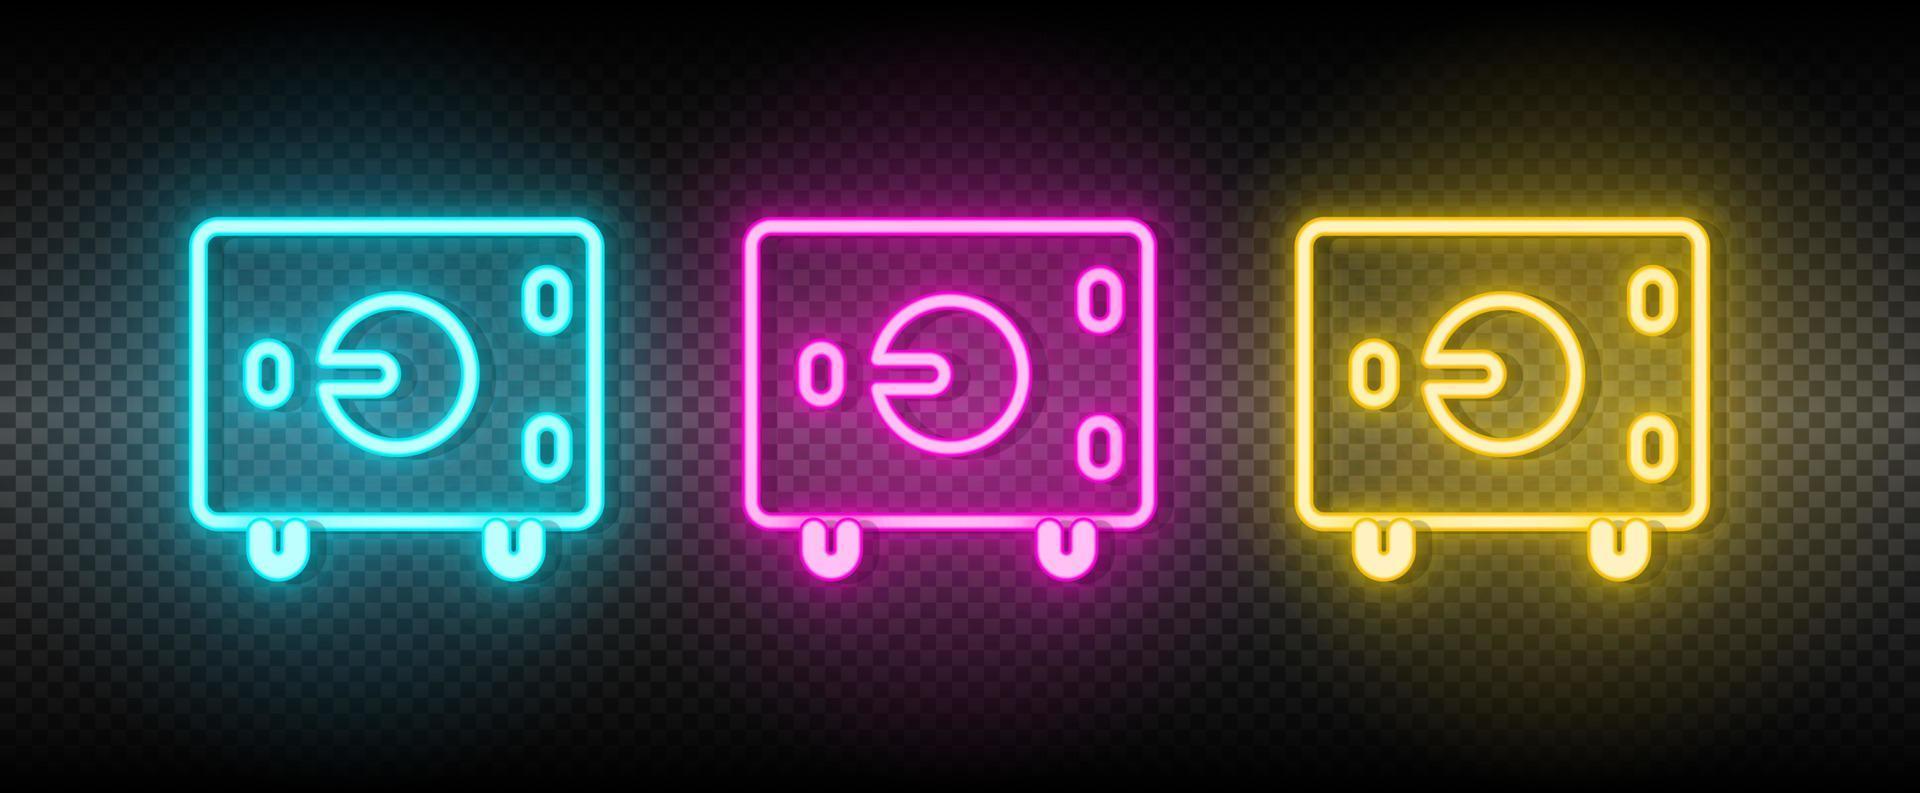 deposit, money, safe neon vector icon. Illustration neon blue, yellow, red icon set